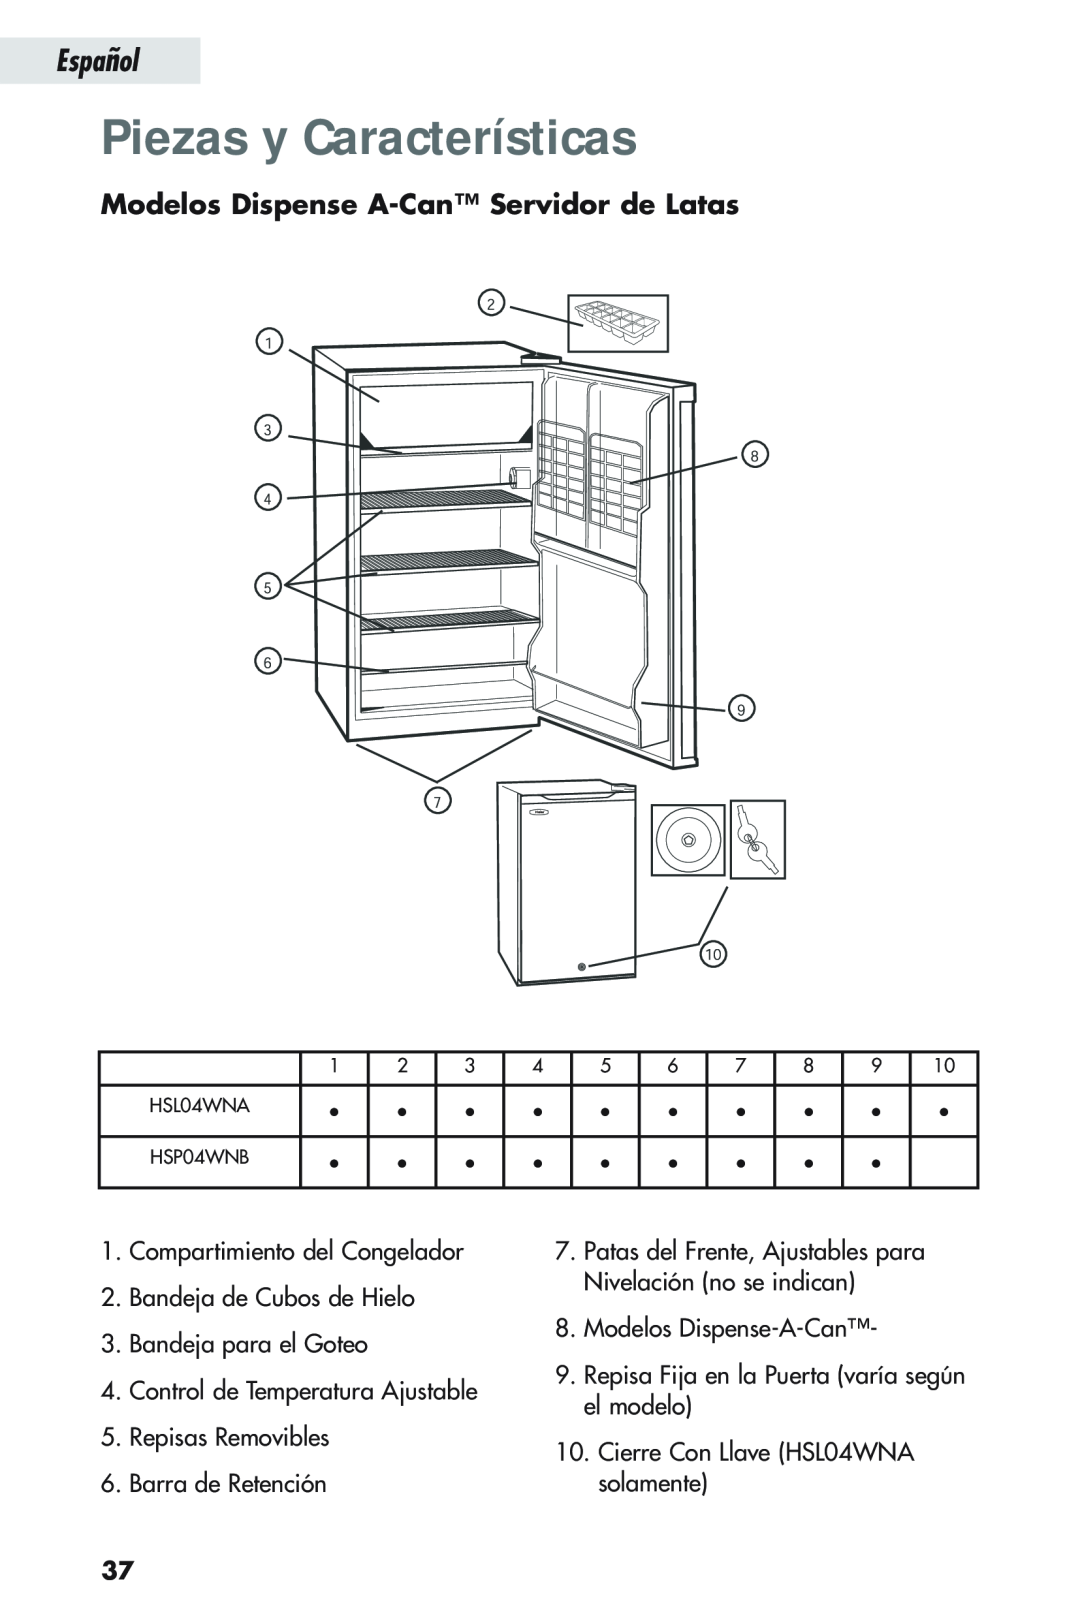 Haier HSL04WNA, HSP04WNB user manual Piezas y Características, Modelos Dispense A-Can Servidor de Latas, Español 